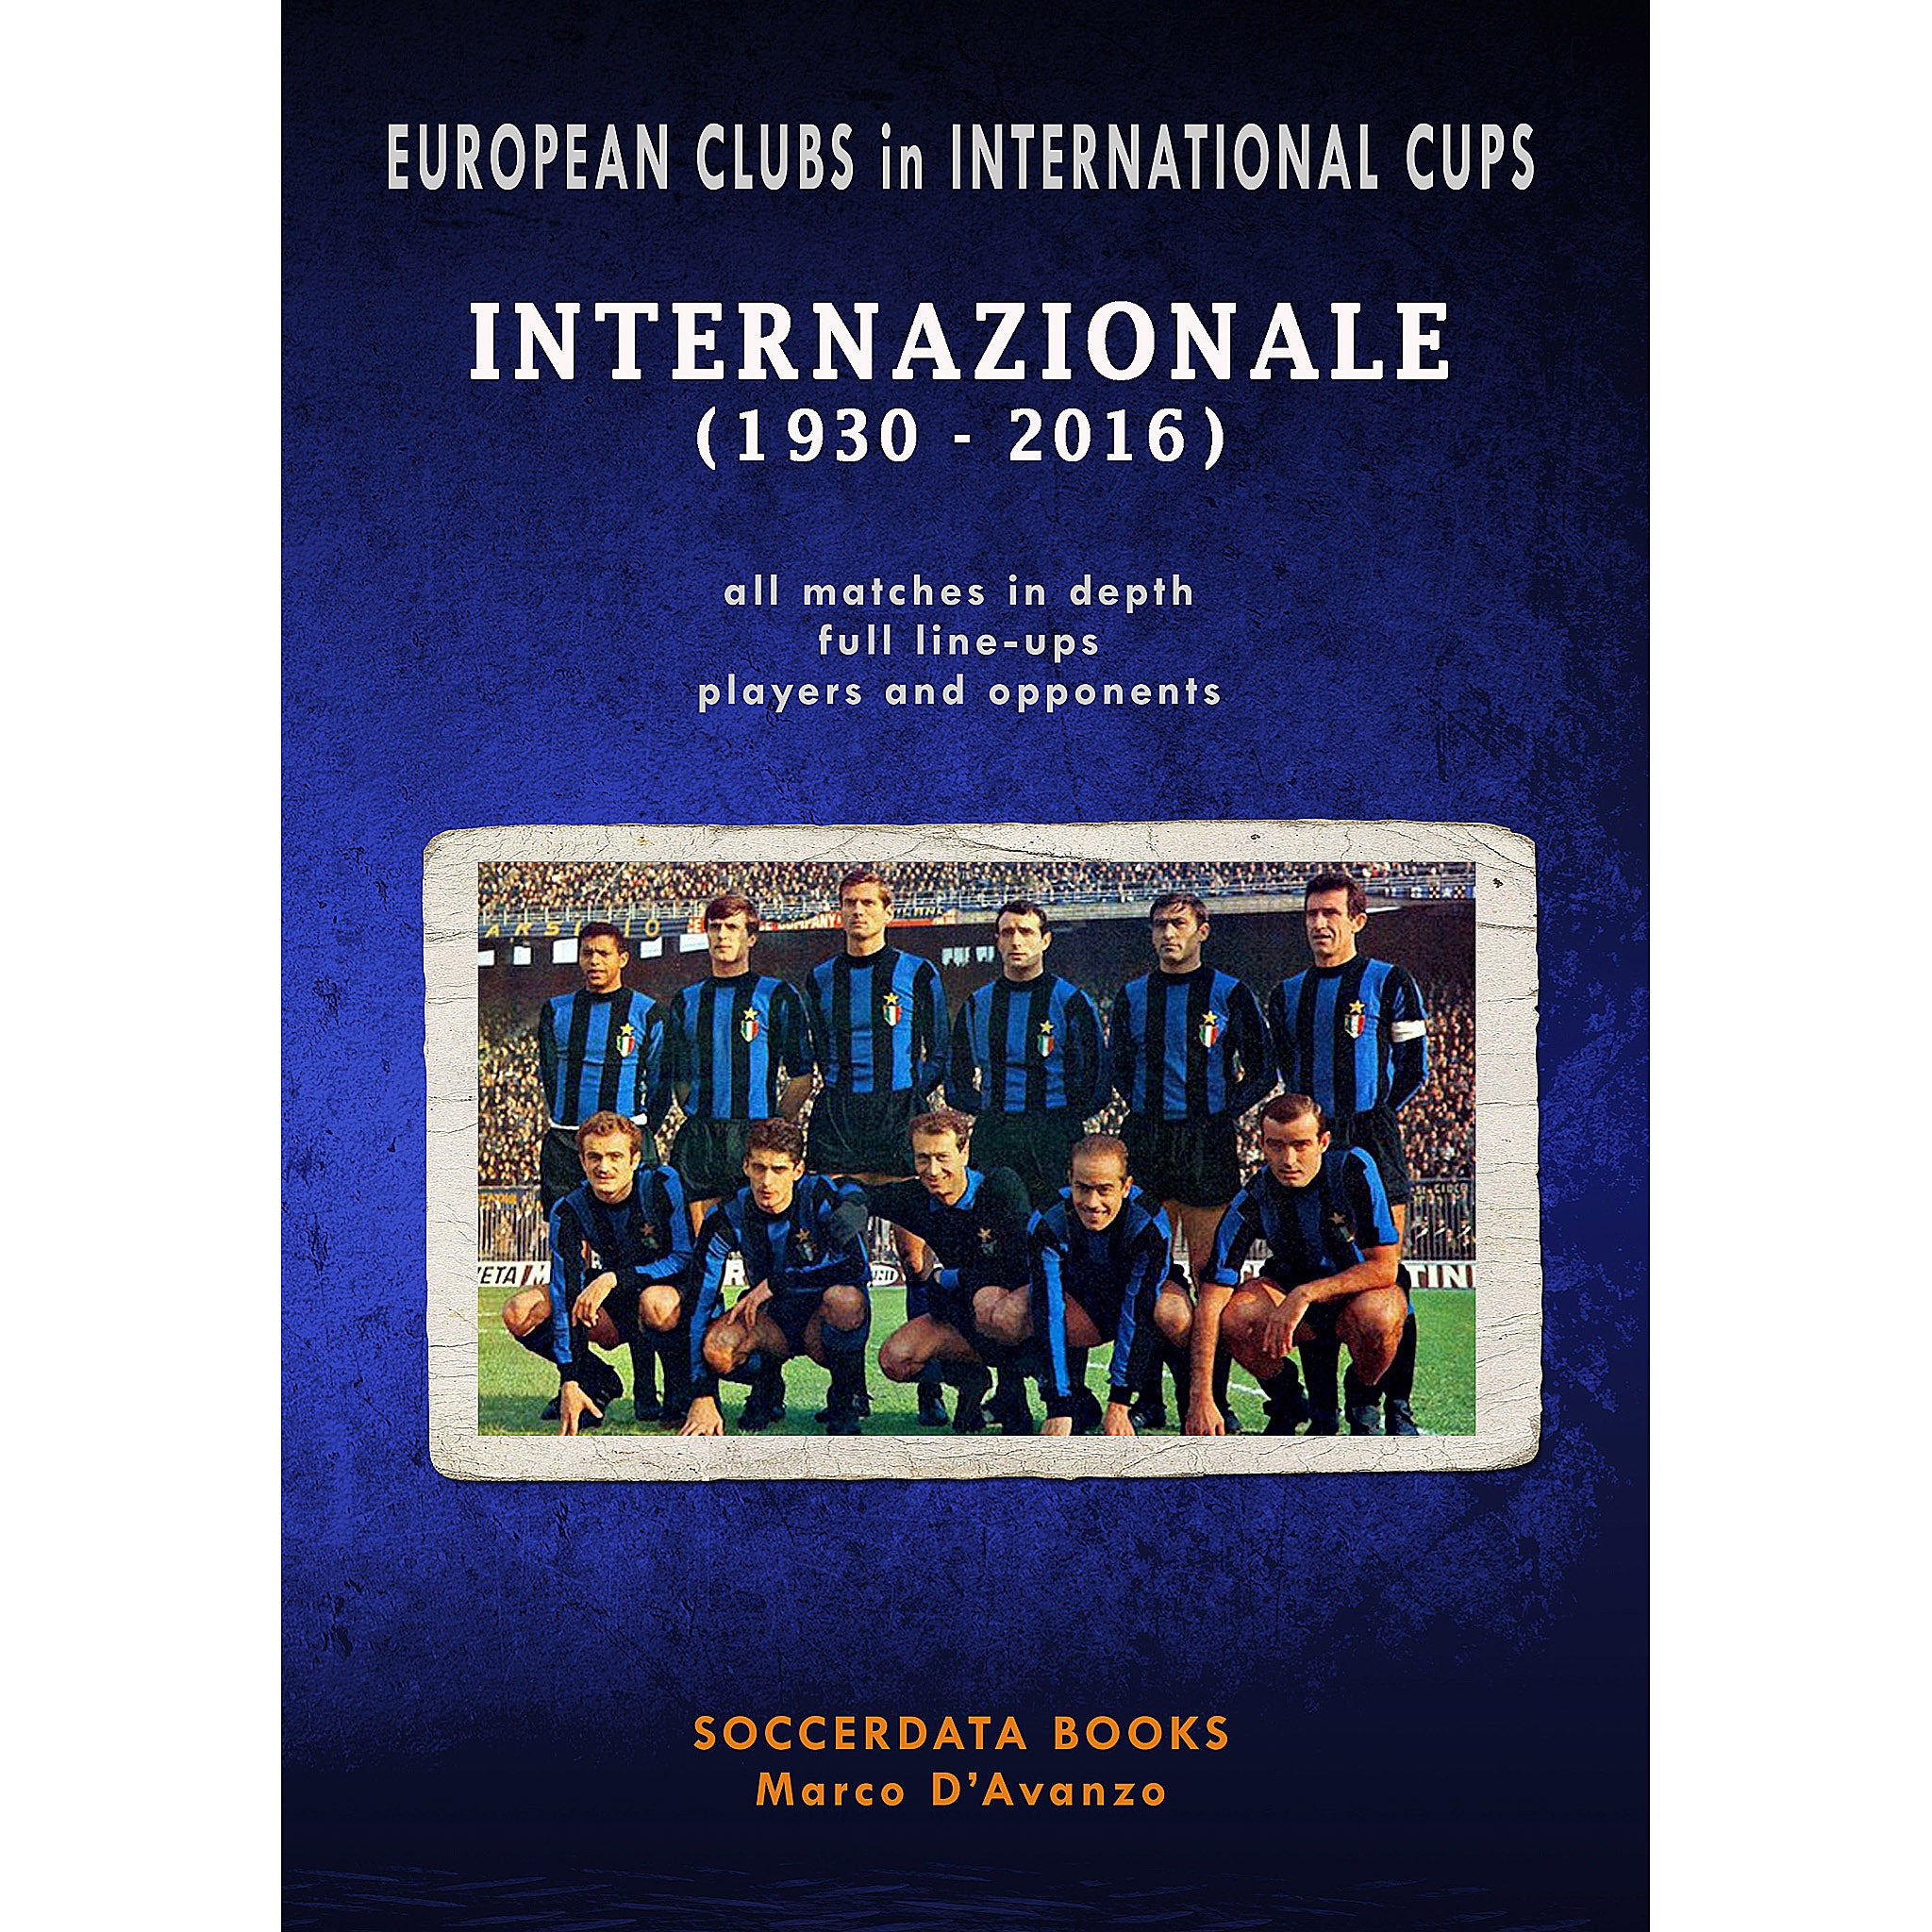 European Clubs in International Cups – Internazionale (1930-2016)